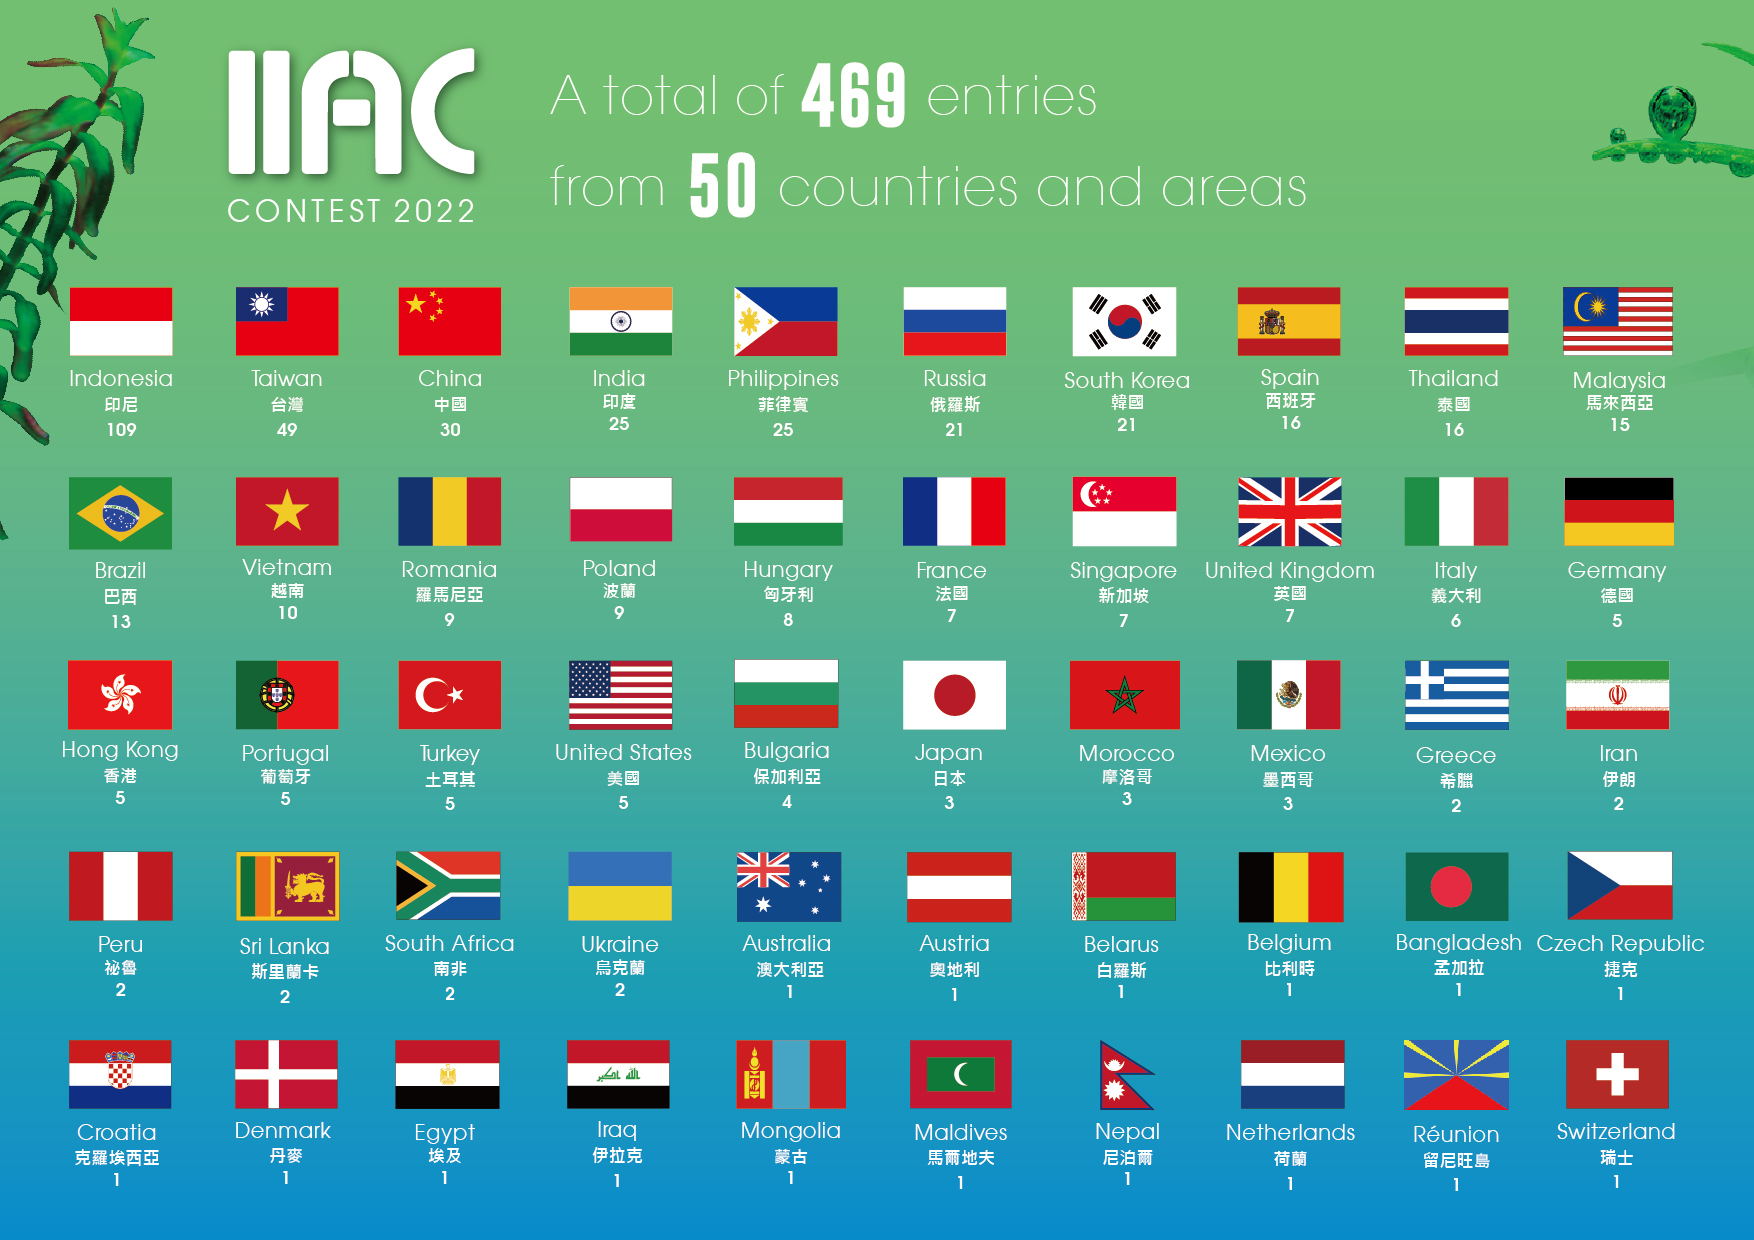 IIAC 2022 World Ranking Announcement